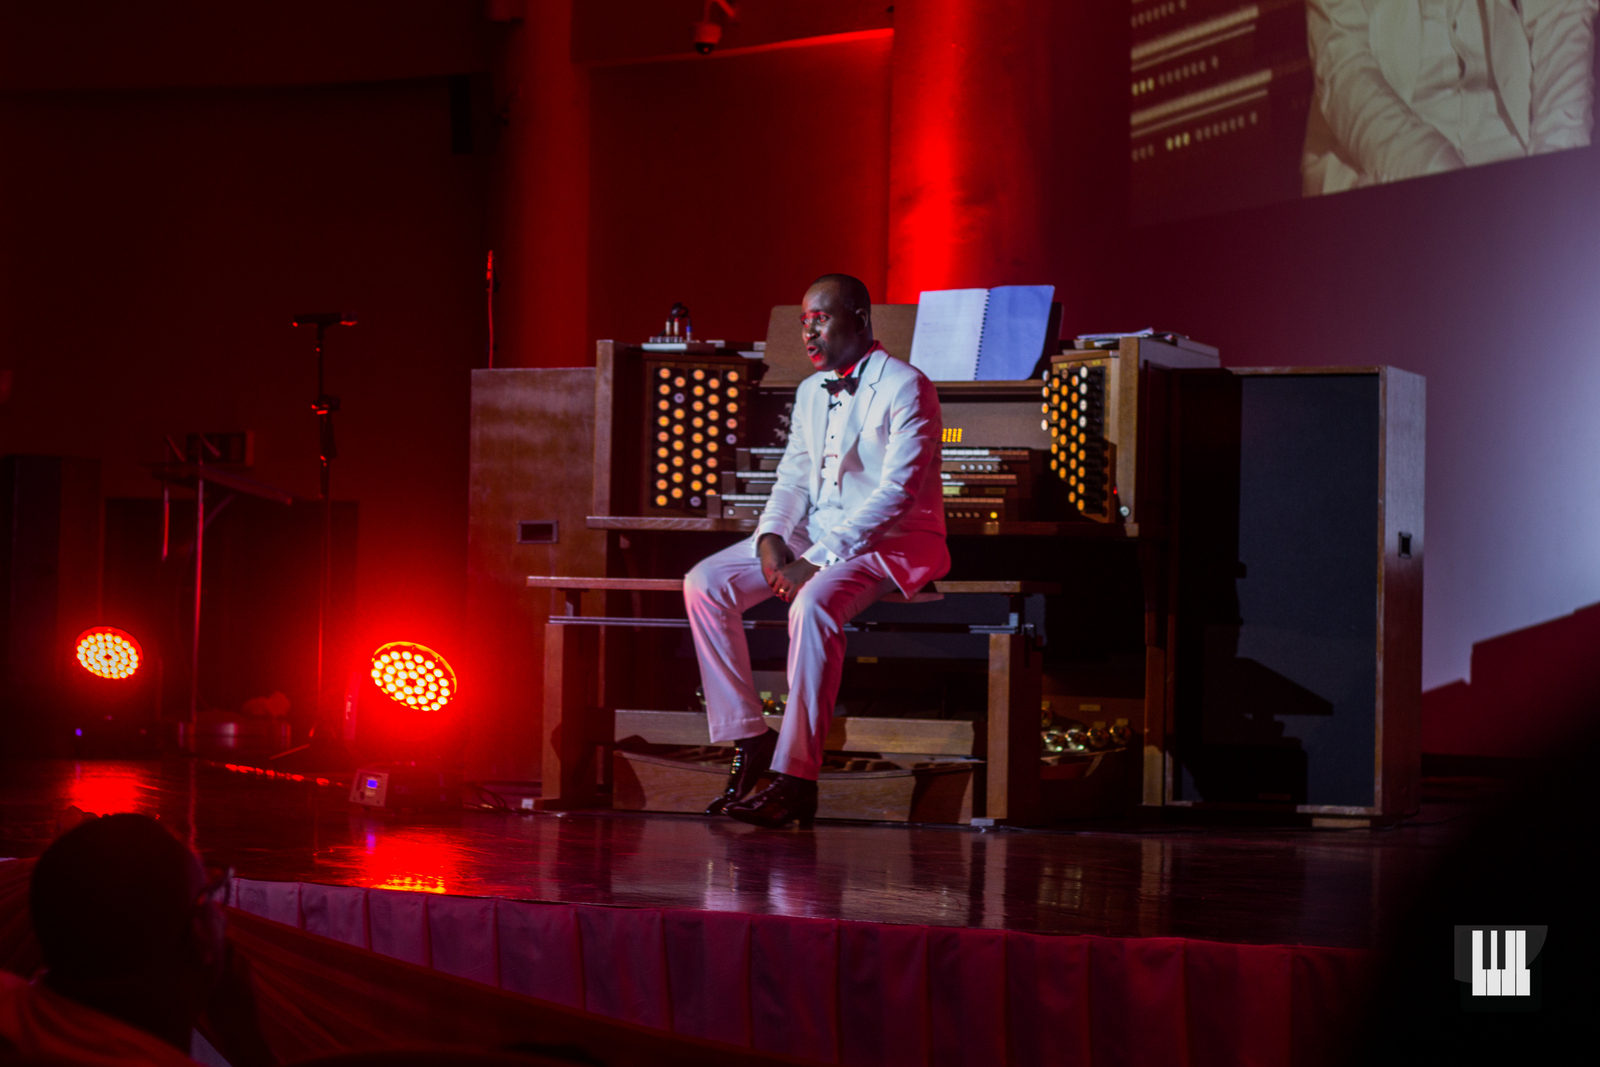 Addaquay's Organ Recital Jesse Johnson reviews Addaquay's first organ recital, powered by Airtel Ghana